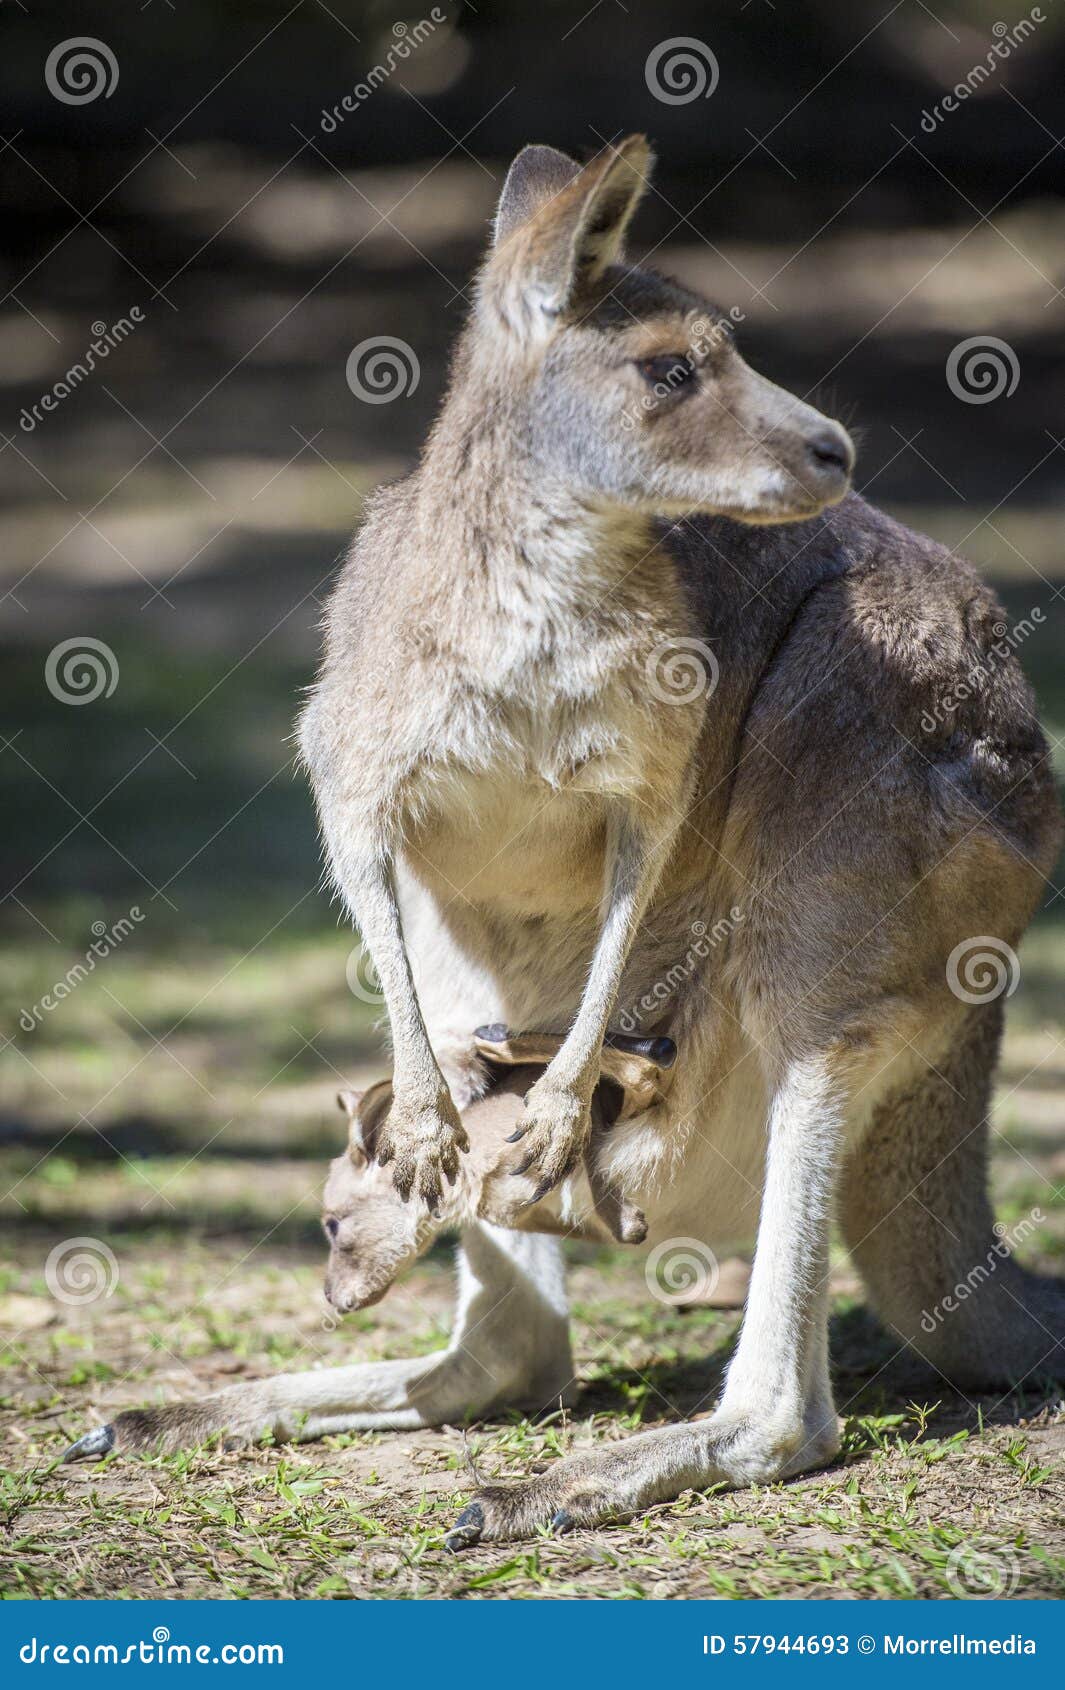 Kangaroo Family Australia stock image. Image of located - 57944693